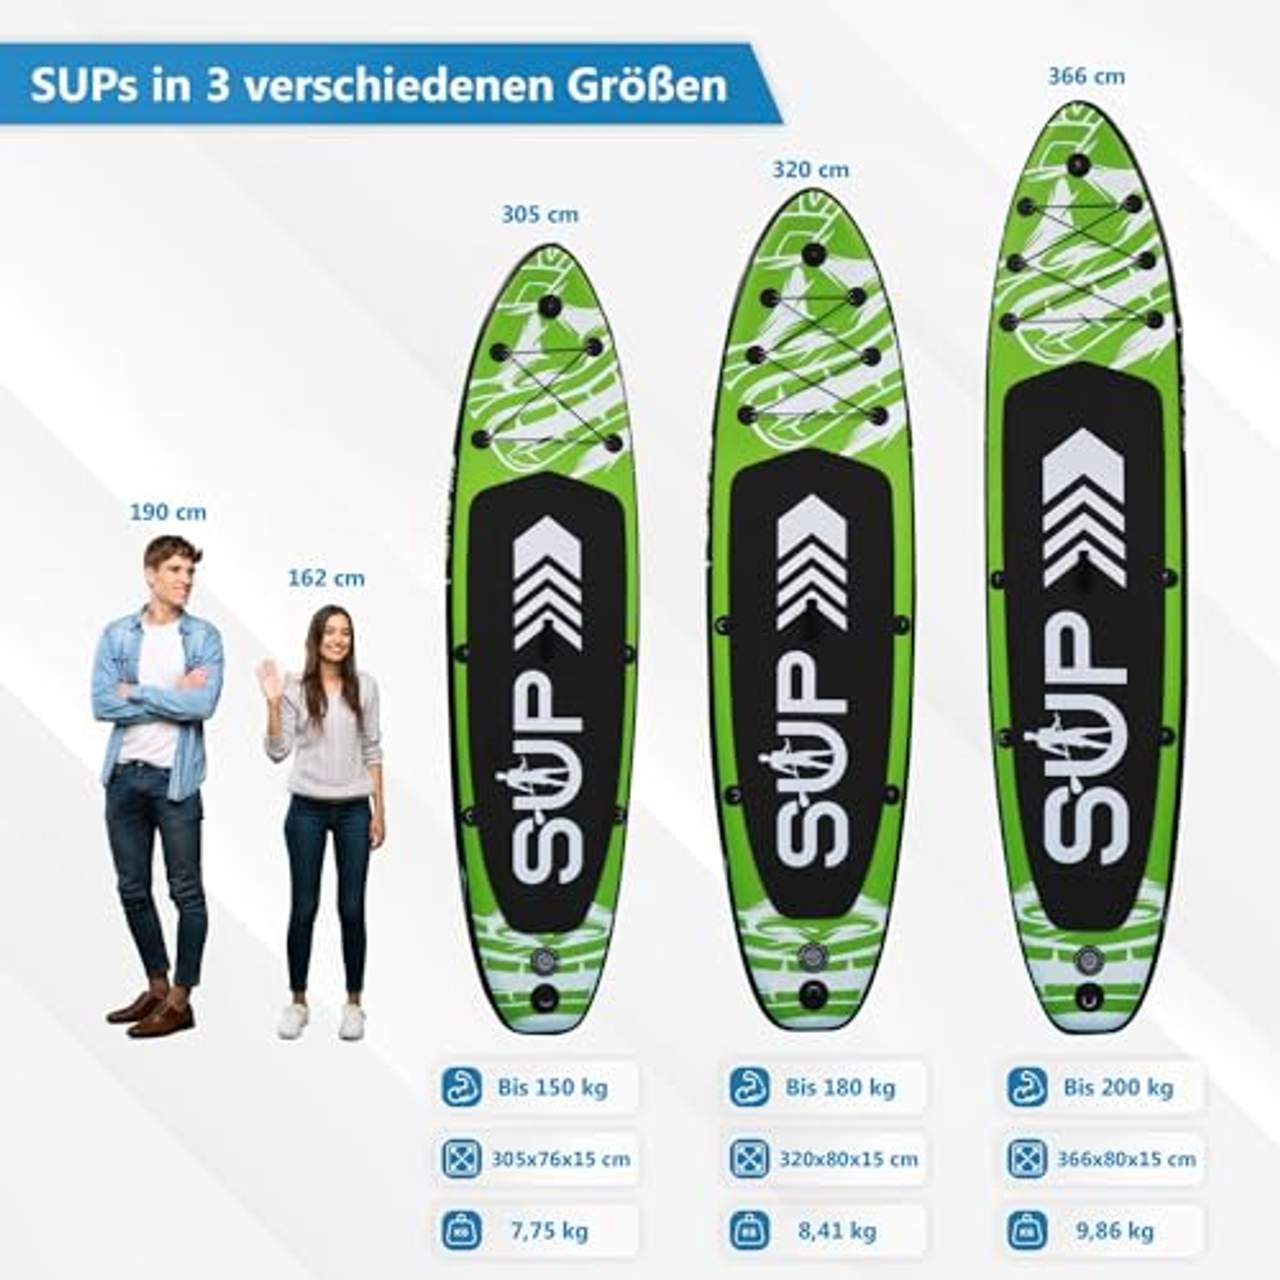 24MOVE Sup Board Set Premium Stand Up Paddle Board 366cm